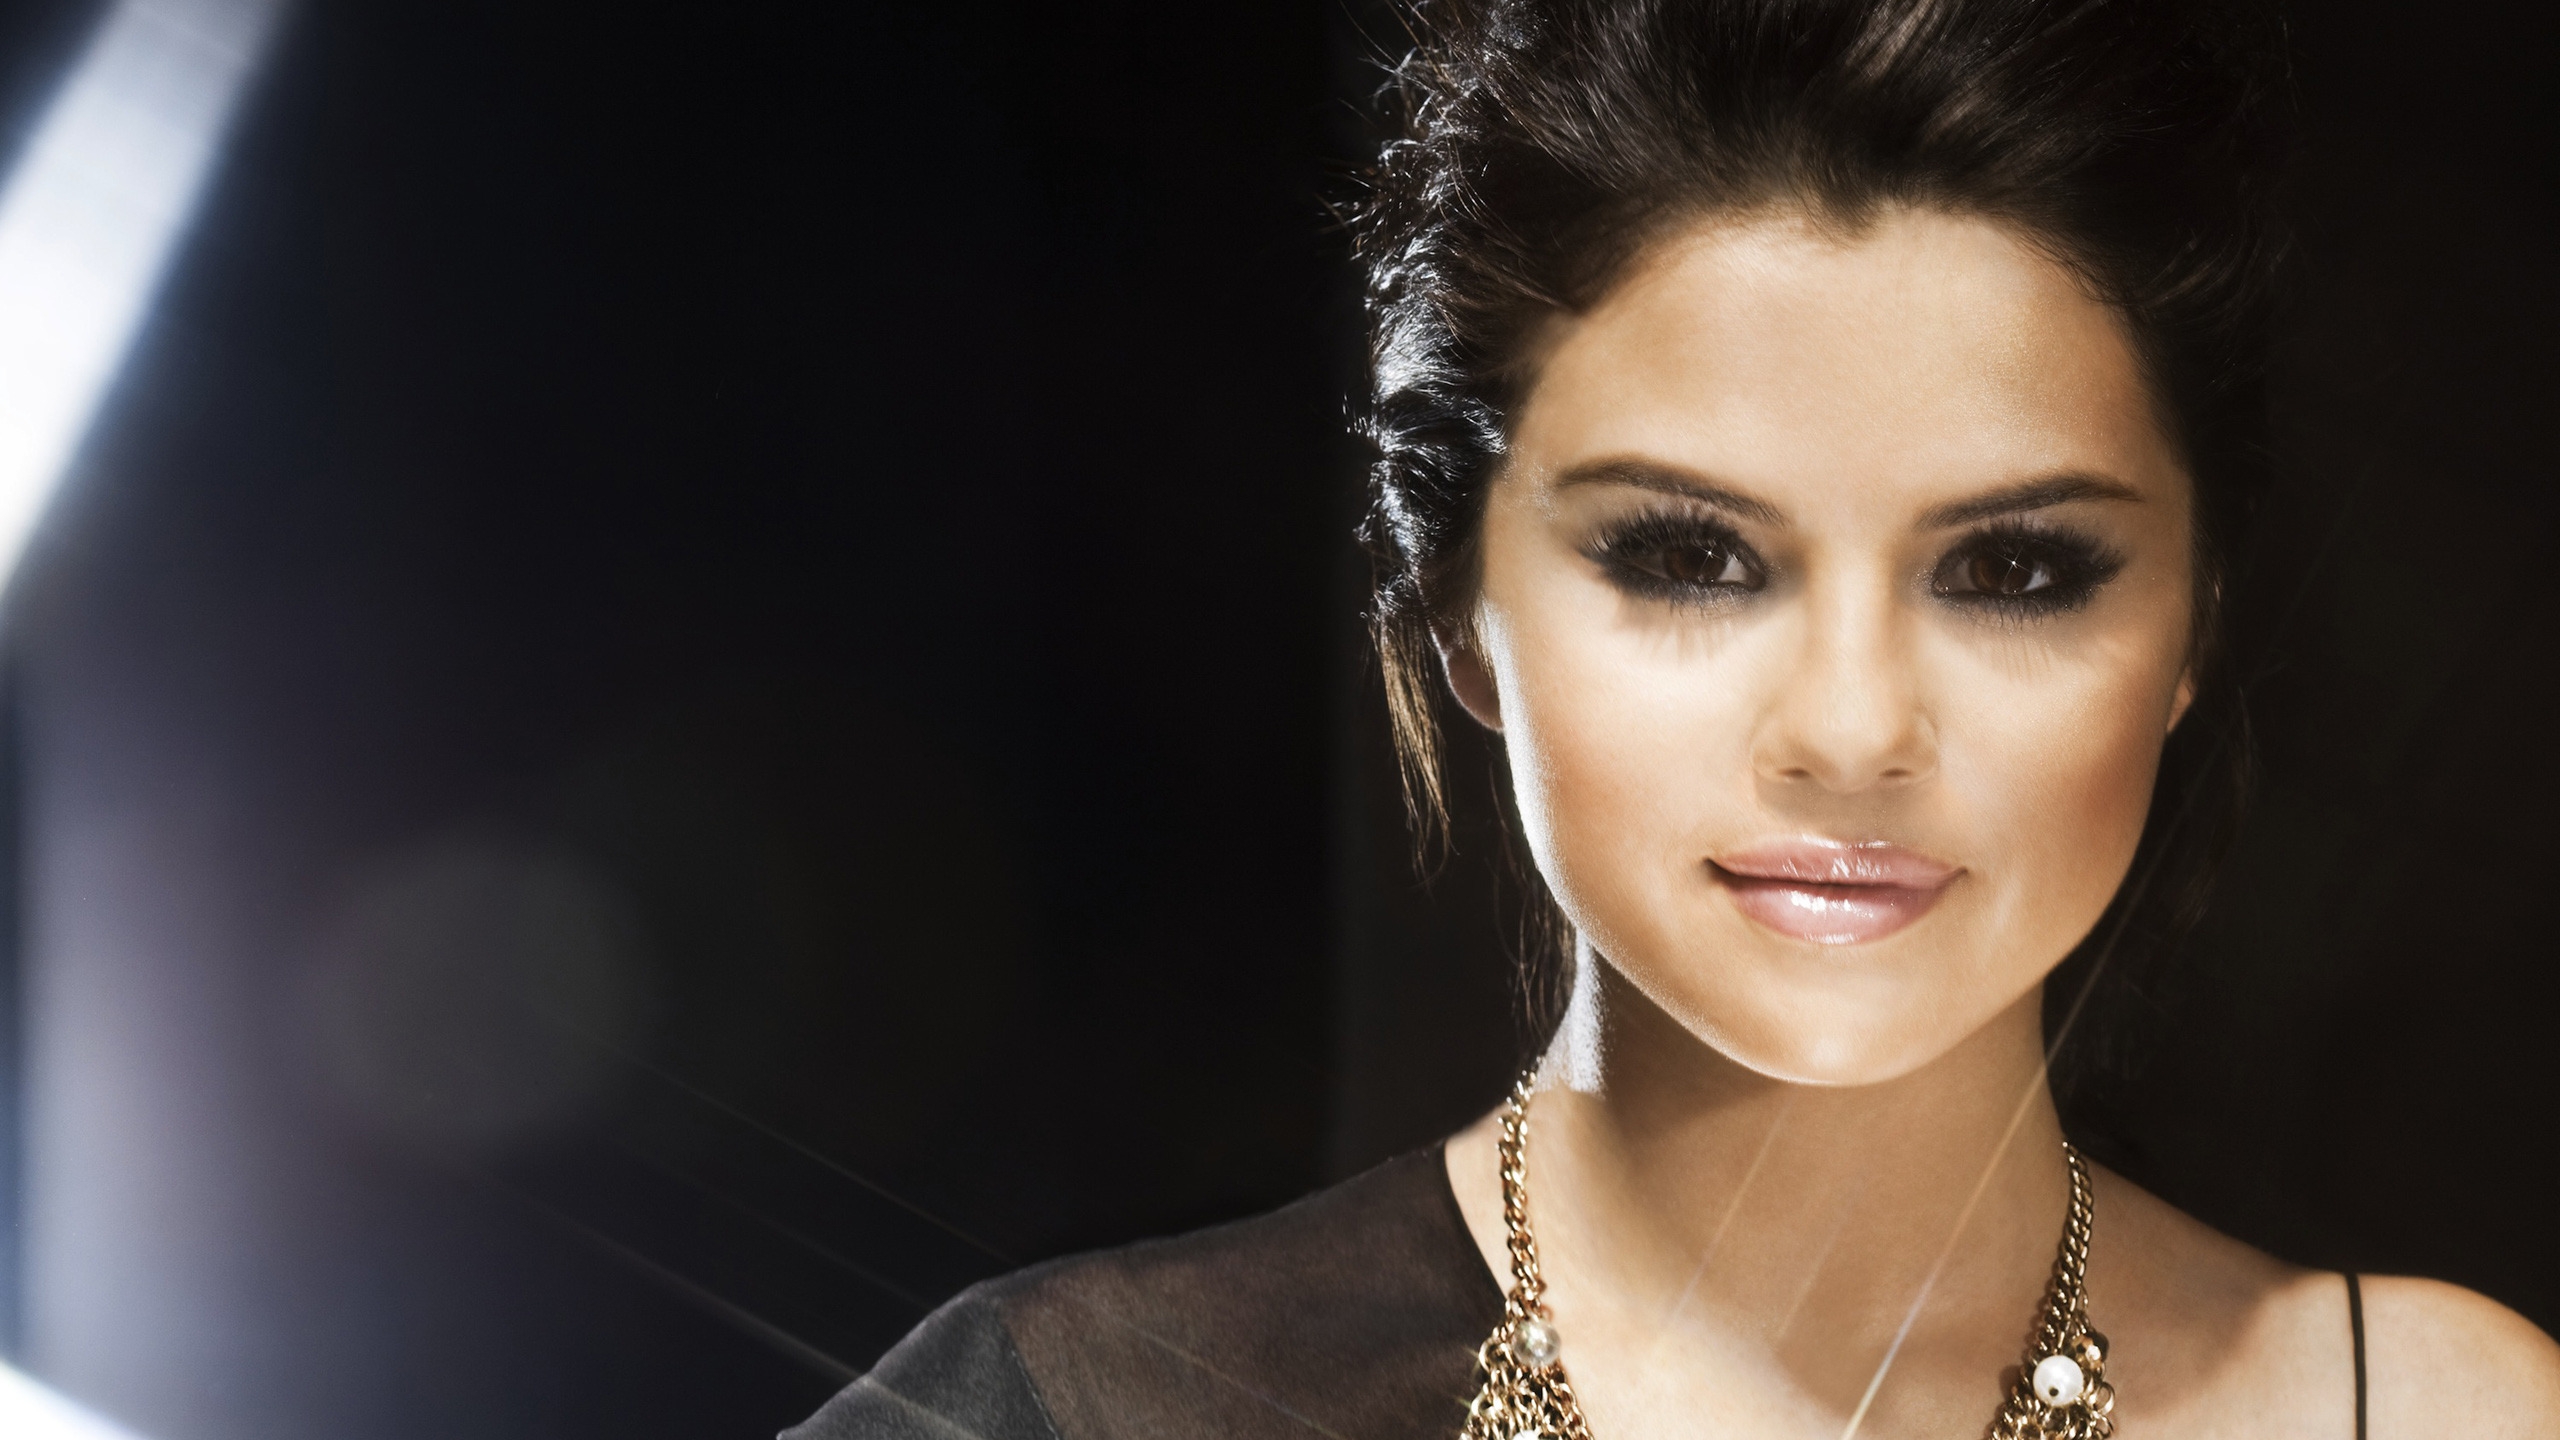 Beautiful Selena Gomez for 2560x1440 HDTV resolution